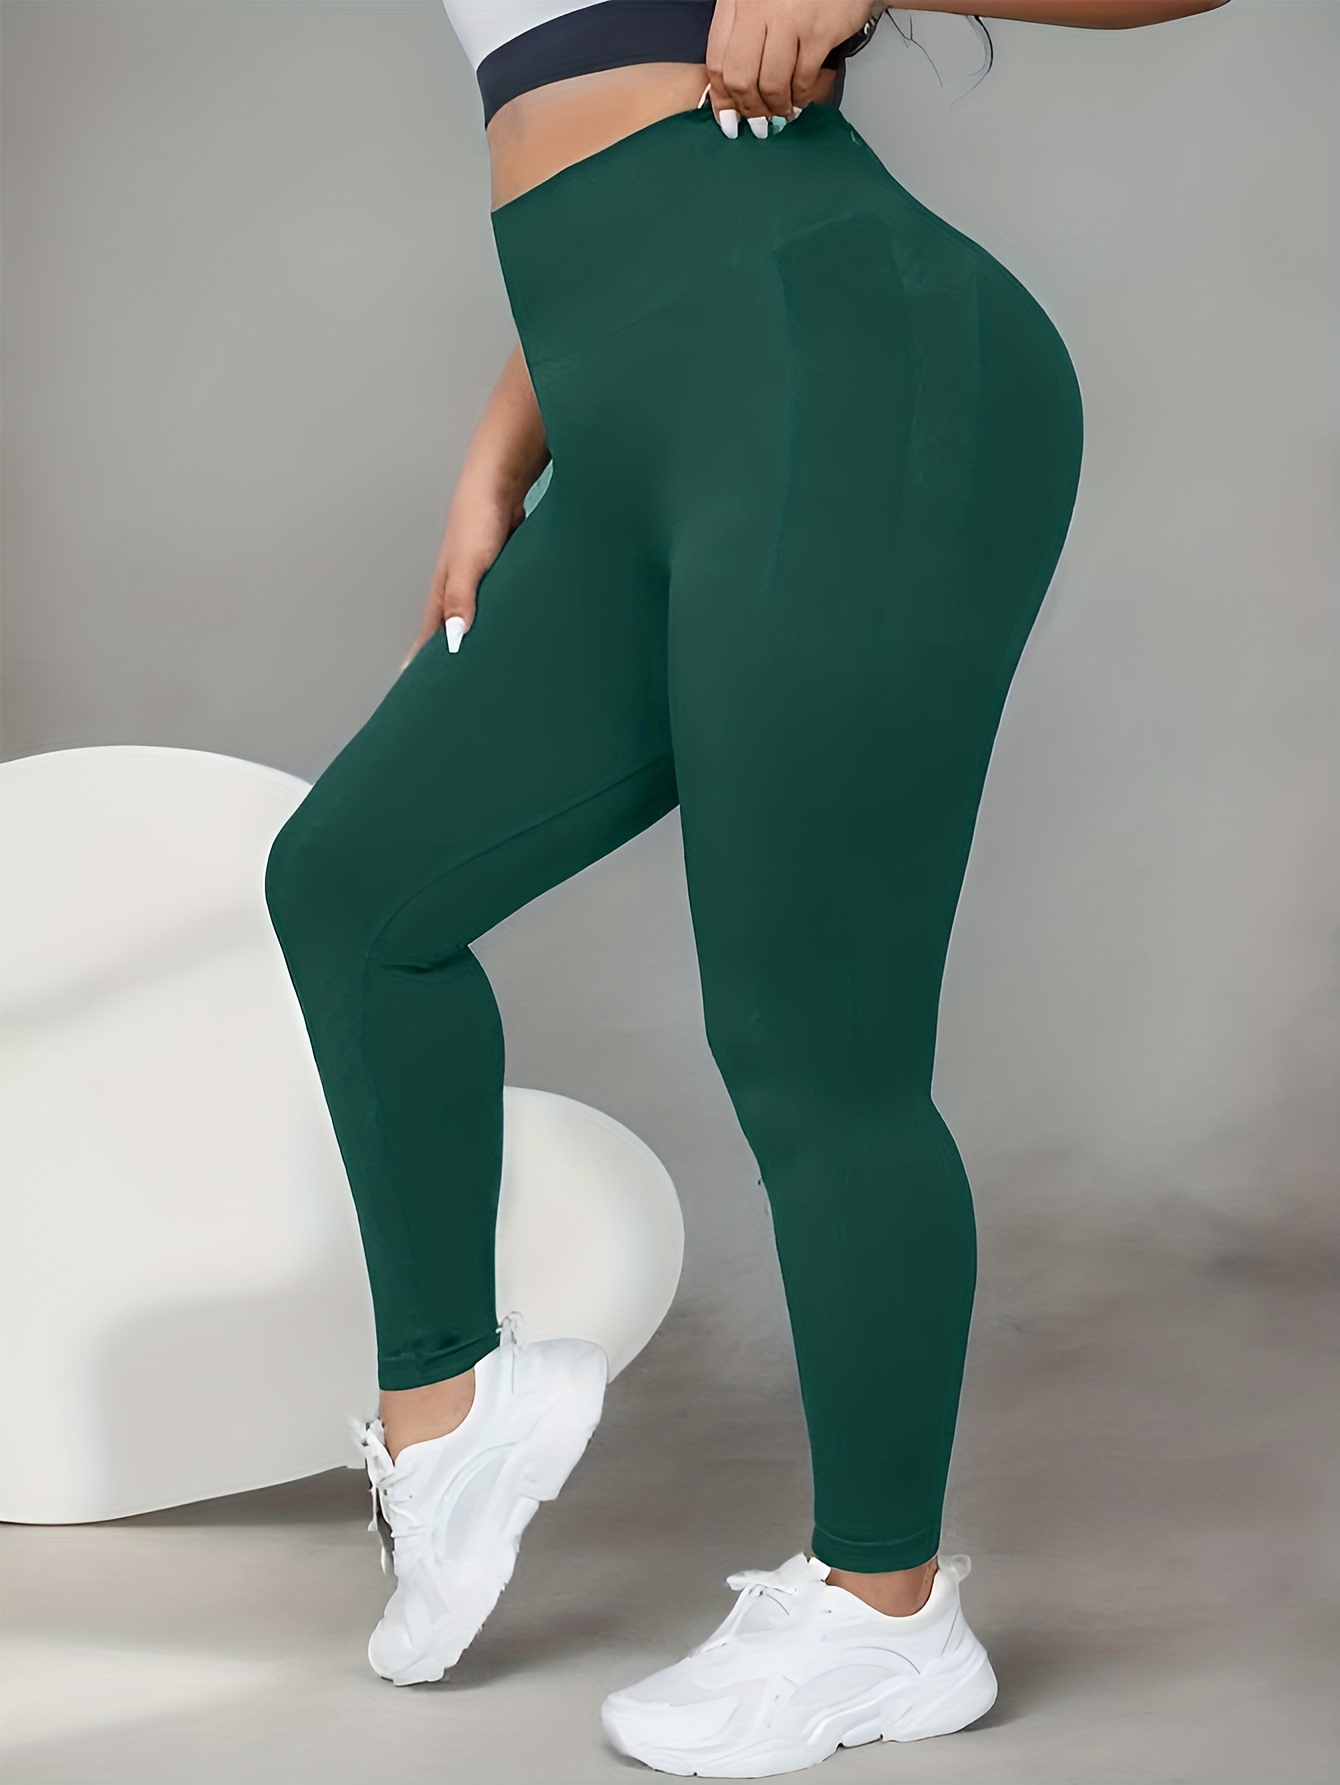 Leggings Yoga Sets Women High Waist Plus Size Suits Gym Sports Leggings  Pants Workout Activewear Black Top XL (Rainbow Green X)